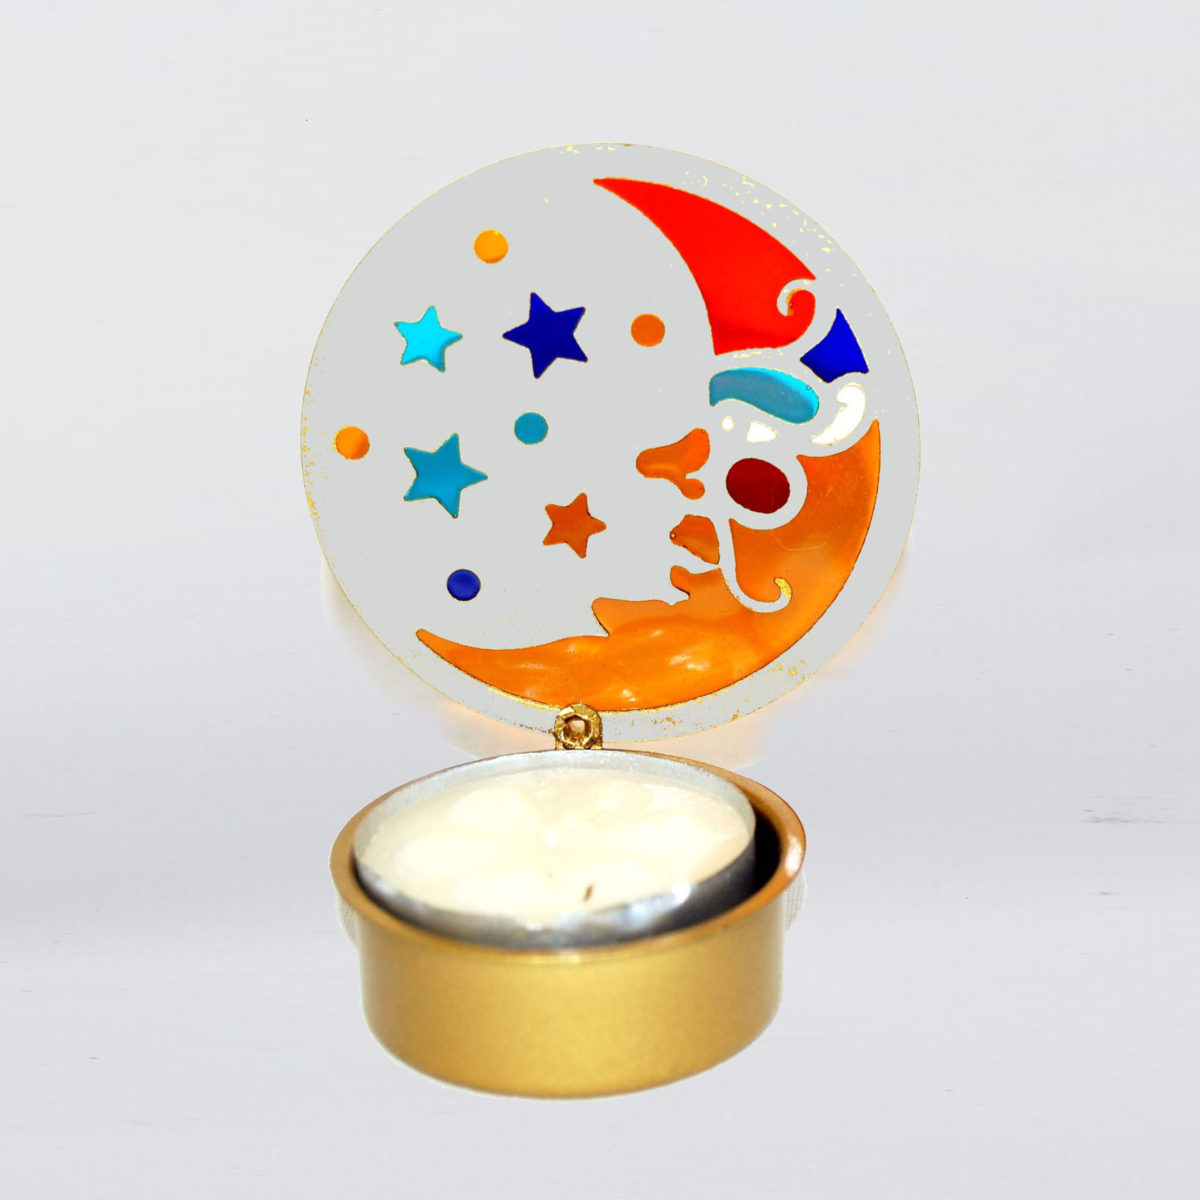 Decorative Tealight Candle Holders – Sun / Star / Moon Design